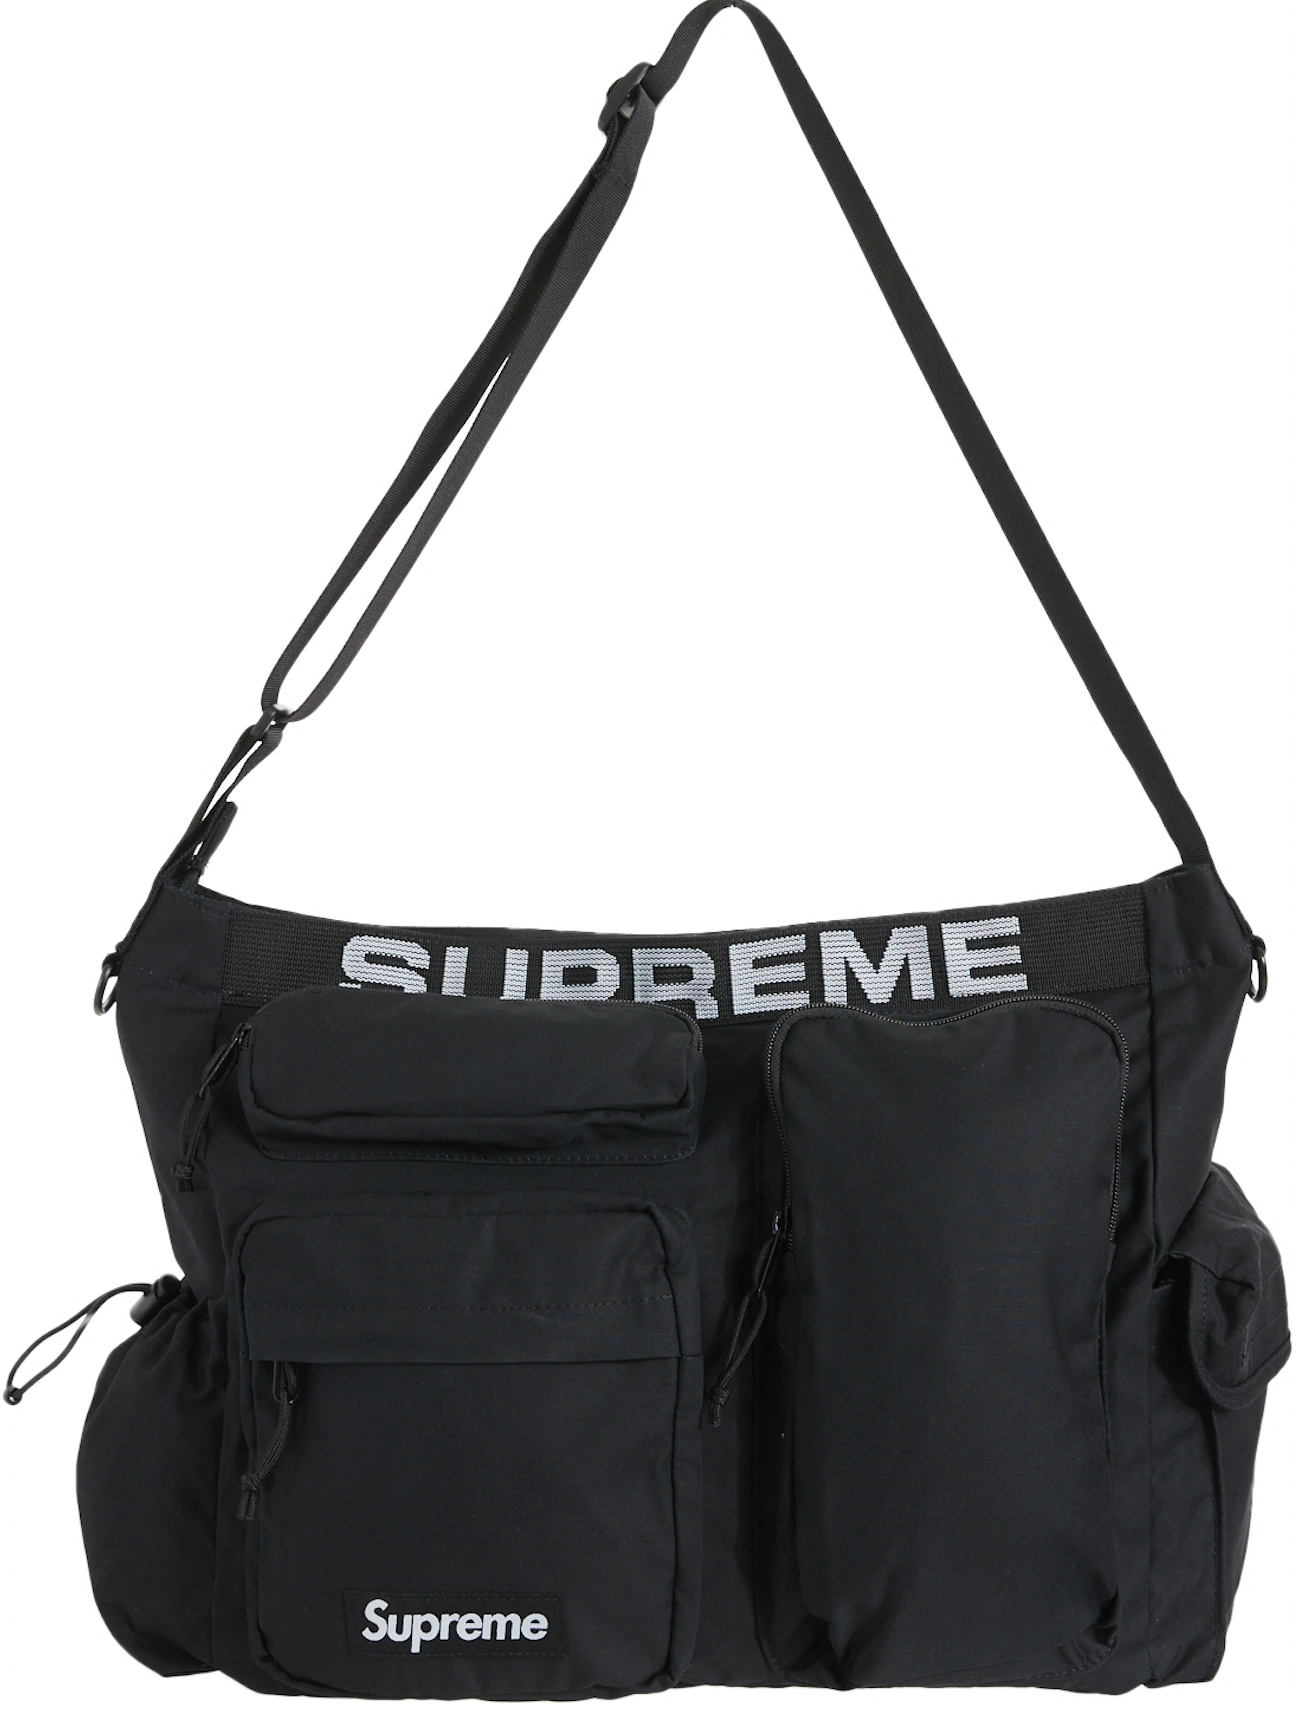 Supreme SS18 Royal Blue Shoulder Bag Cordura Authentic | eBay